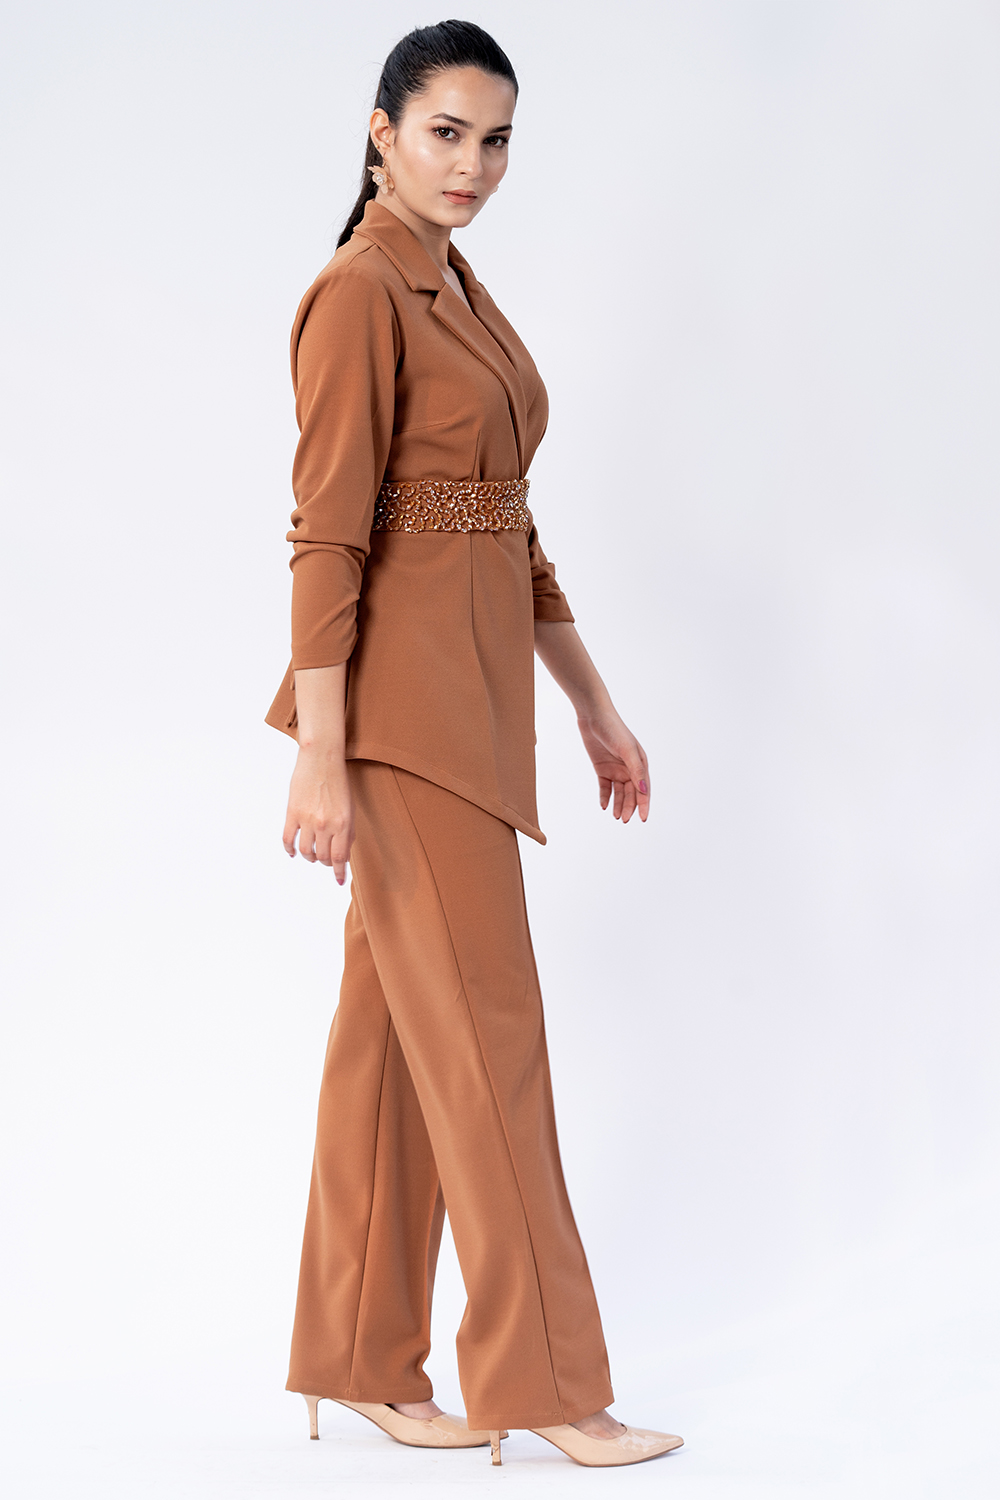 Weaving Cult Tan brown aysmetrical Blazer suit 